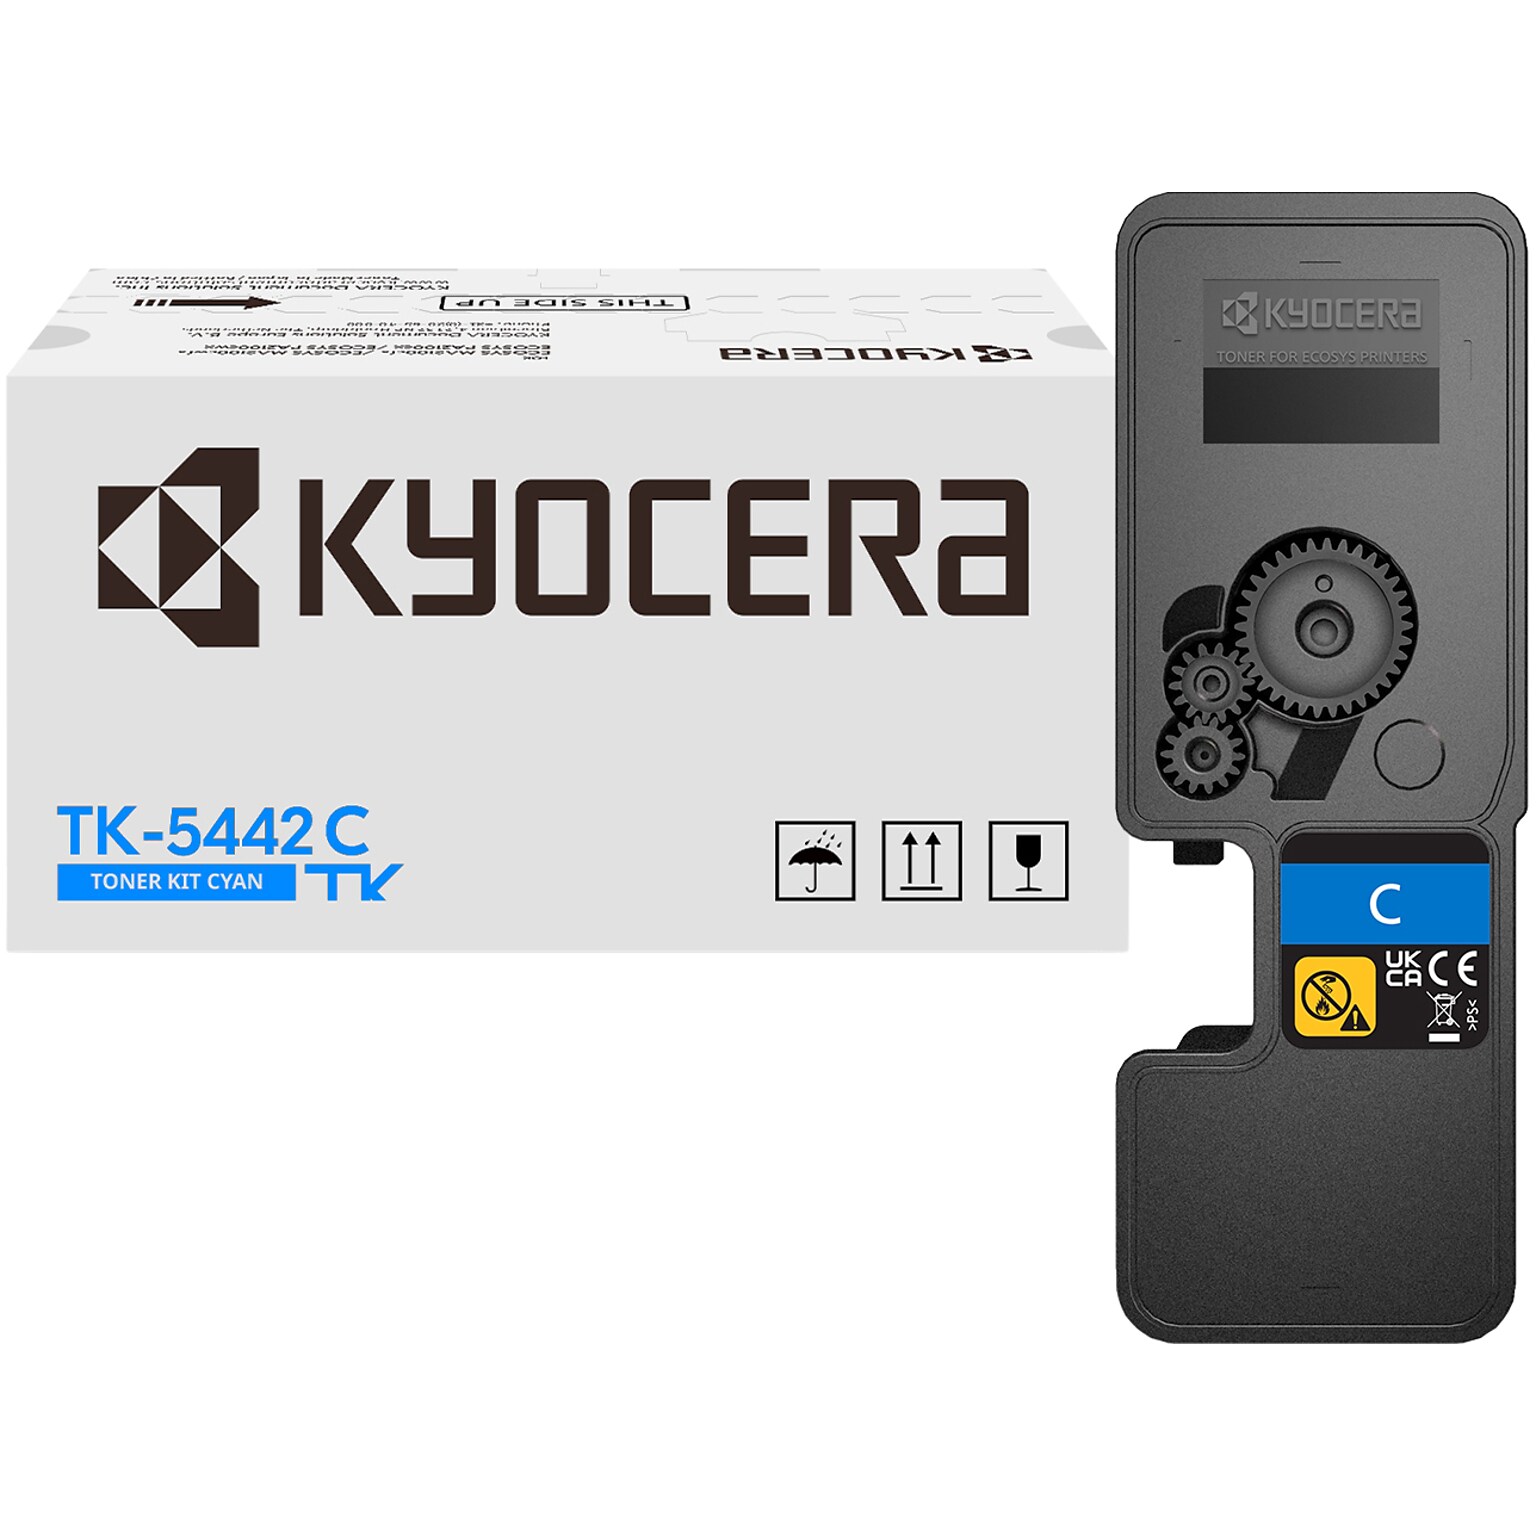 Kyocera TK-5442C Cyan High Yield Toner Cartridge (1T0C0ACUS0)